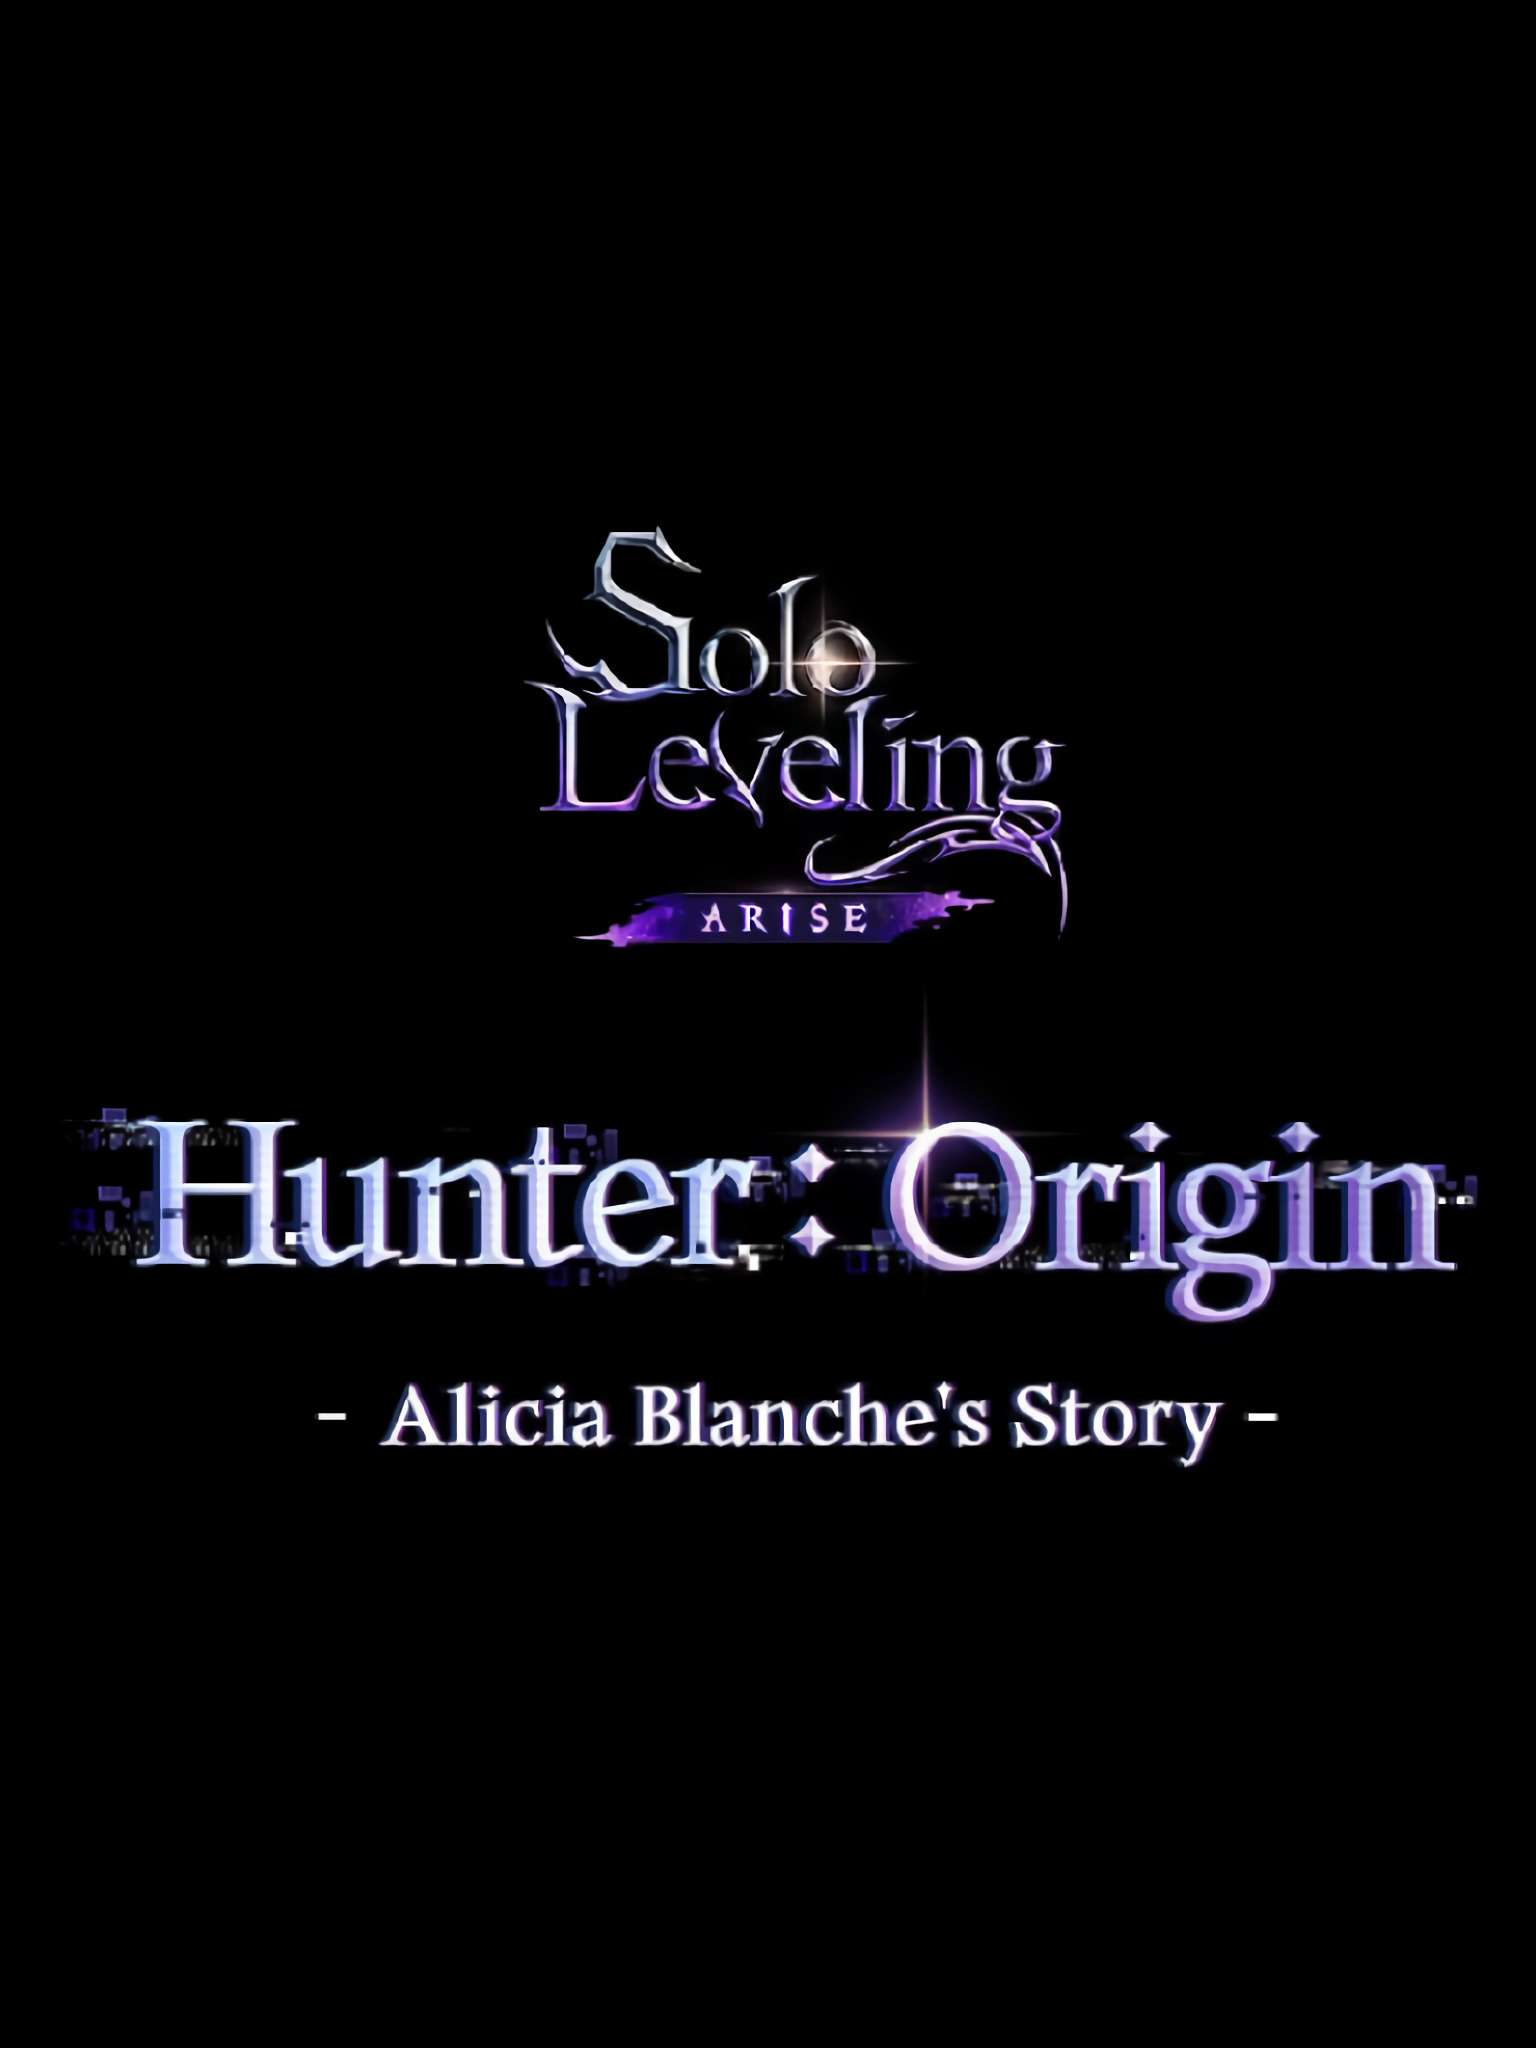 Solo Leveling ARISE: Hunter Origin